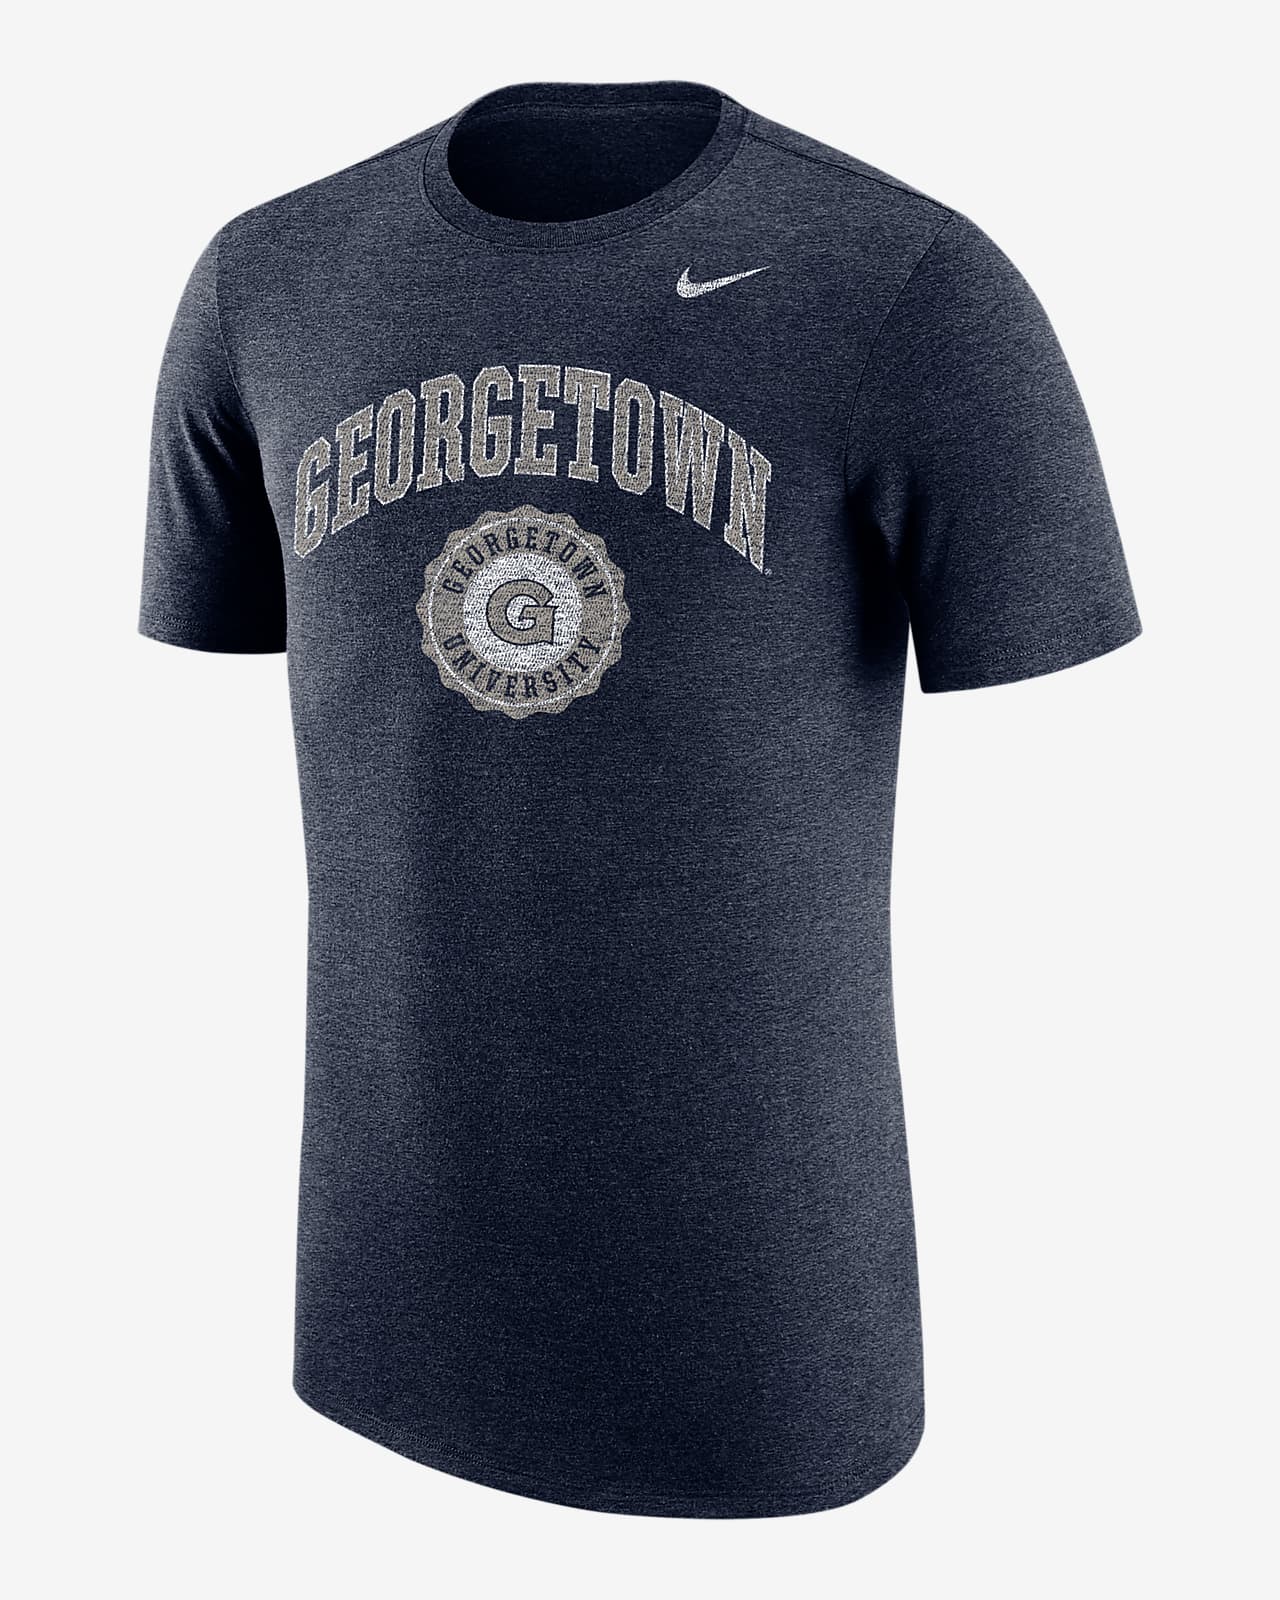 Nike College (Georgetown) Men's T-Shirt. Nike.com